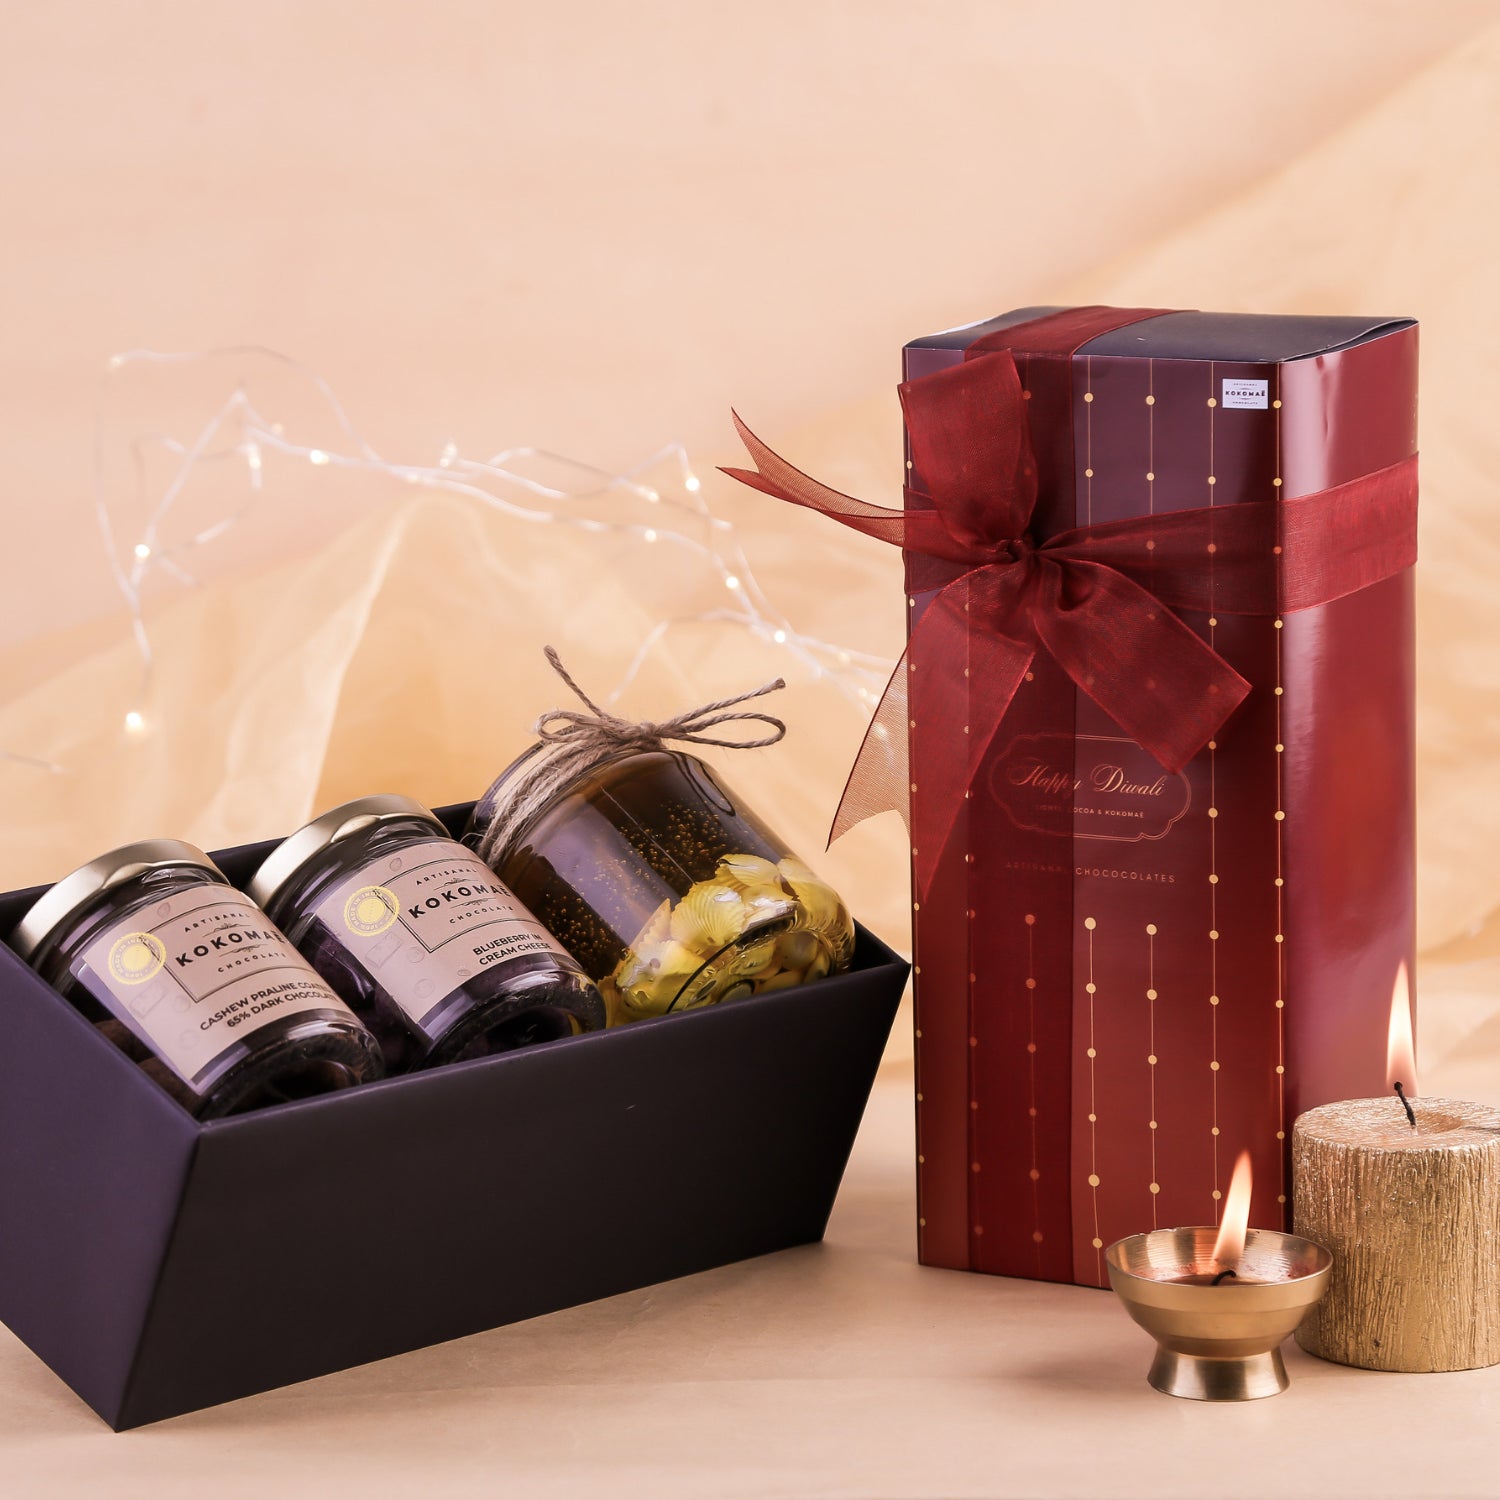 Kokomaē Handcrafted Diwali Gift with 2 Jars of Chocolate Coated Nuts & a Jar Candle